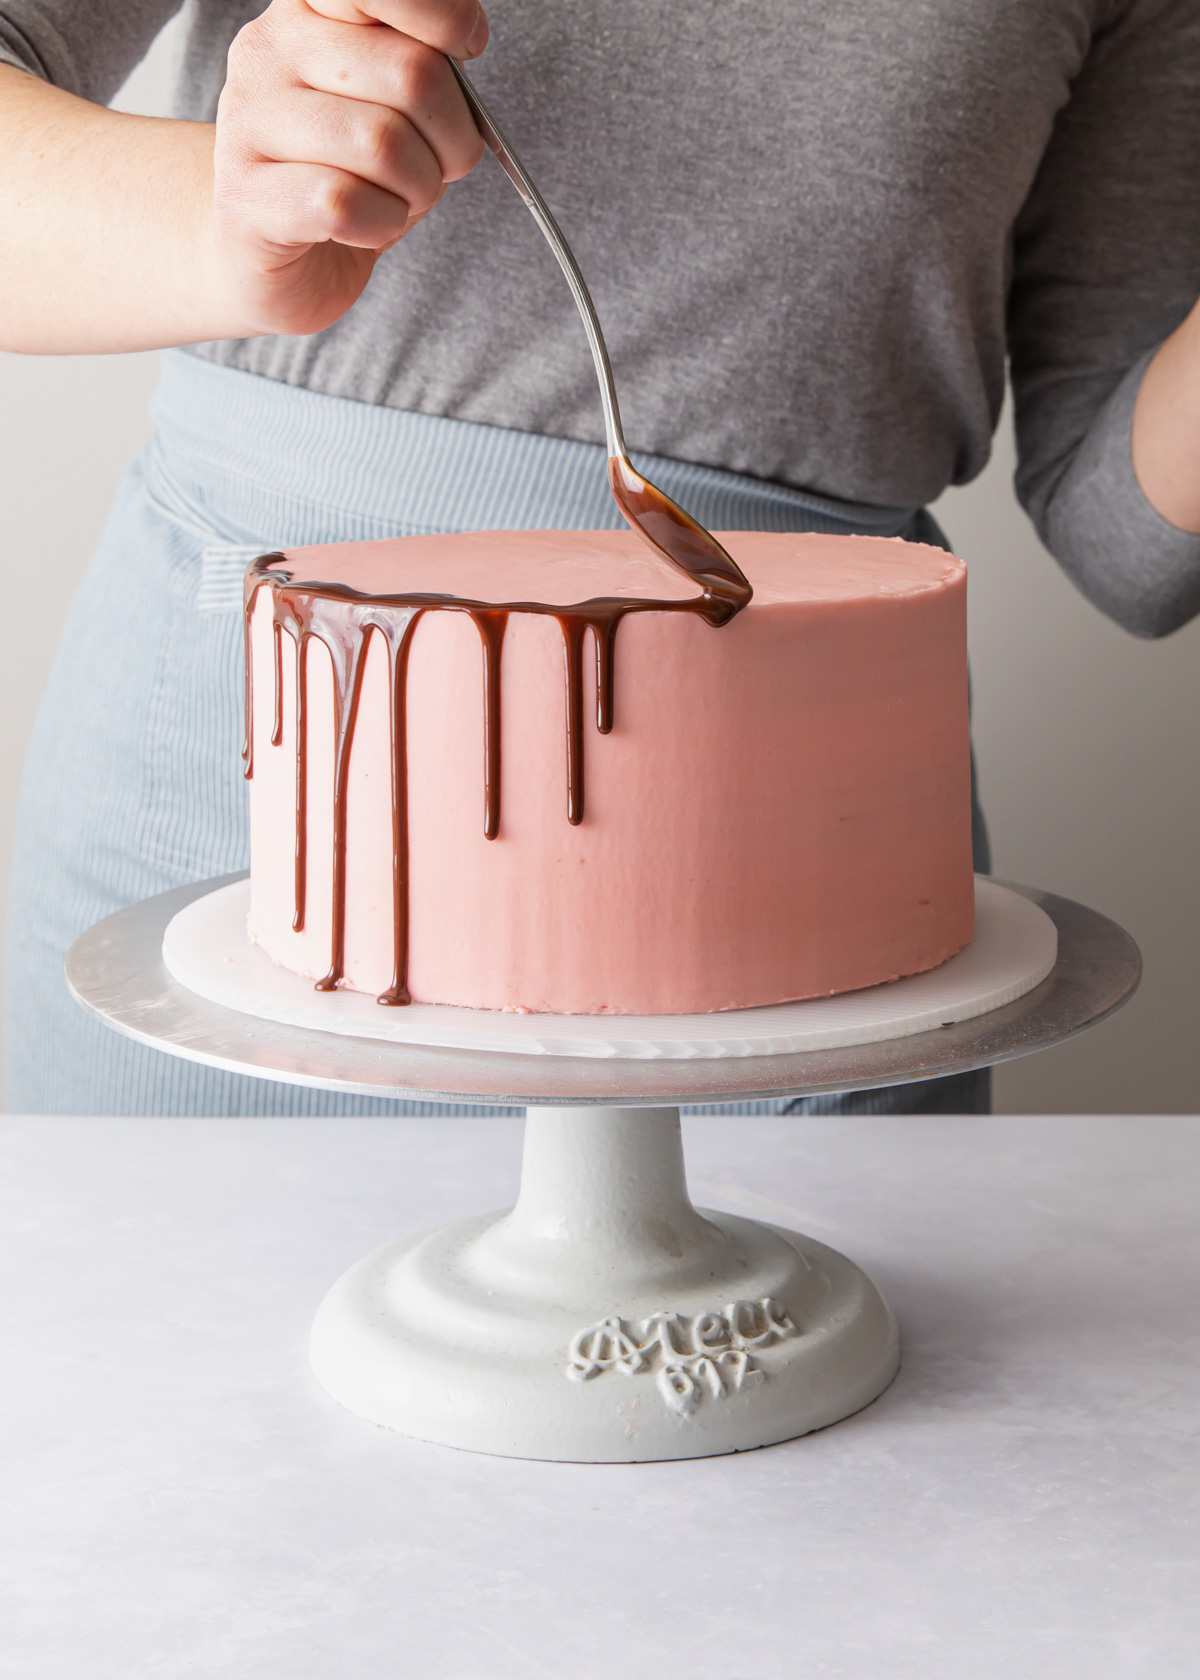 Adding drips of chocolate around the edge of a cake